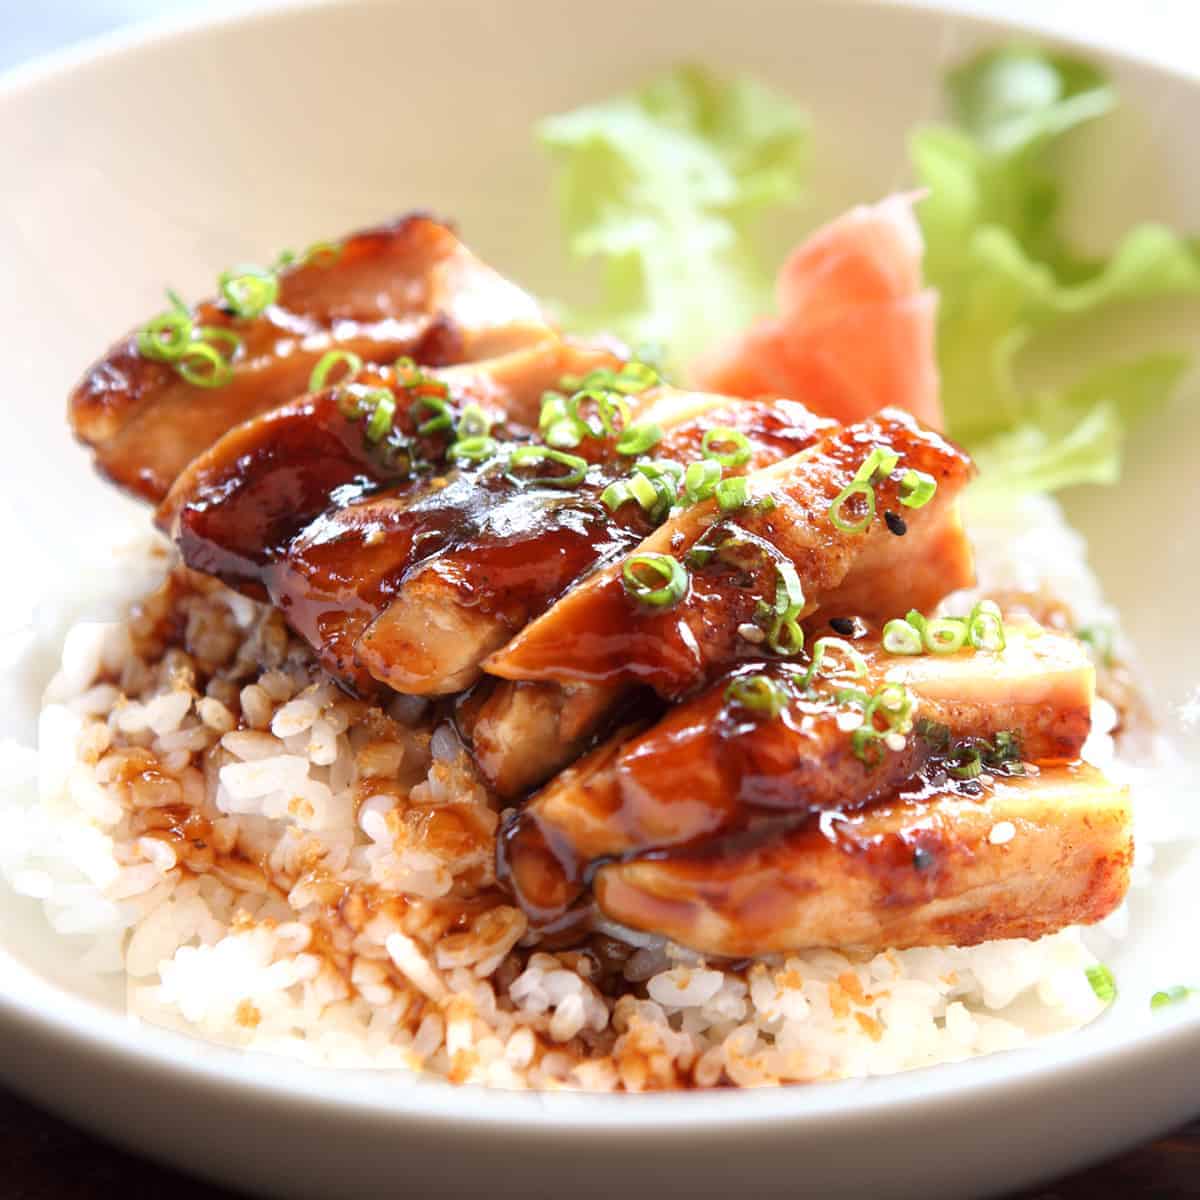 chicken teriyaki recipe best japanese takeout copycat